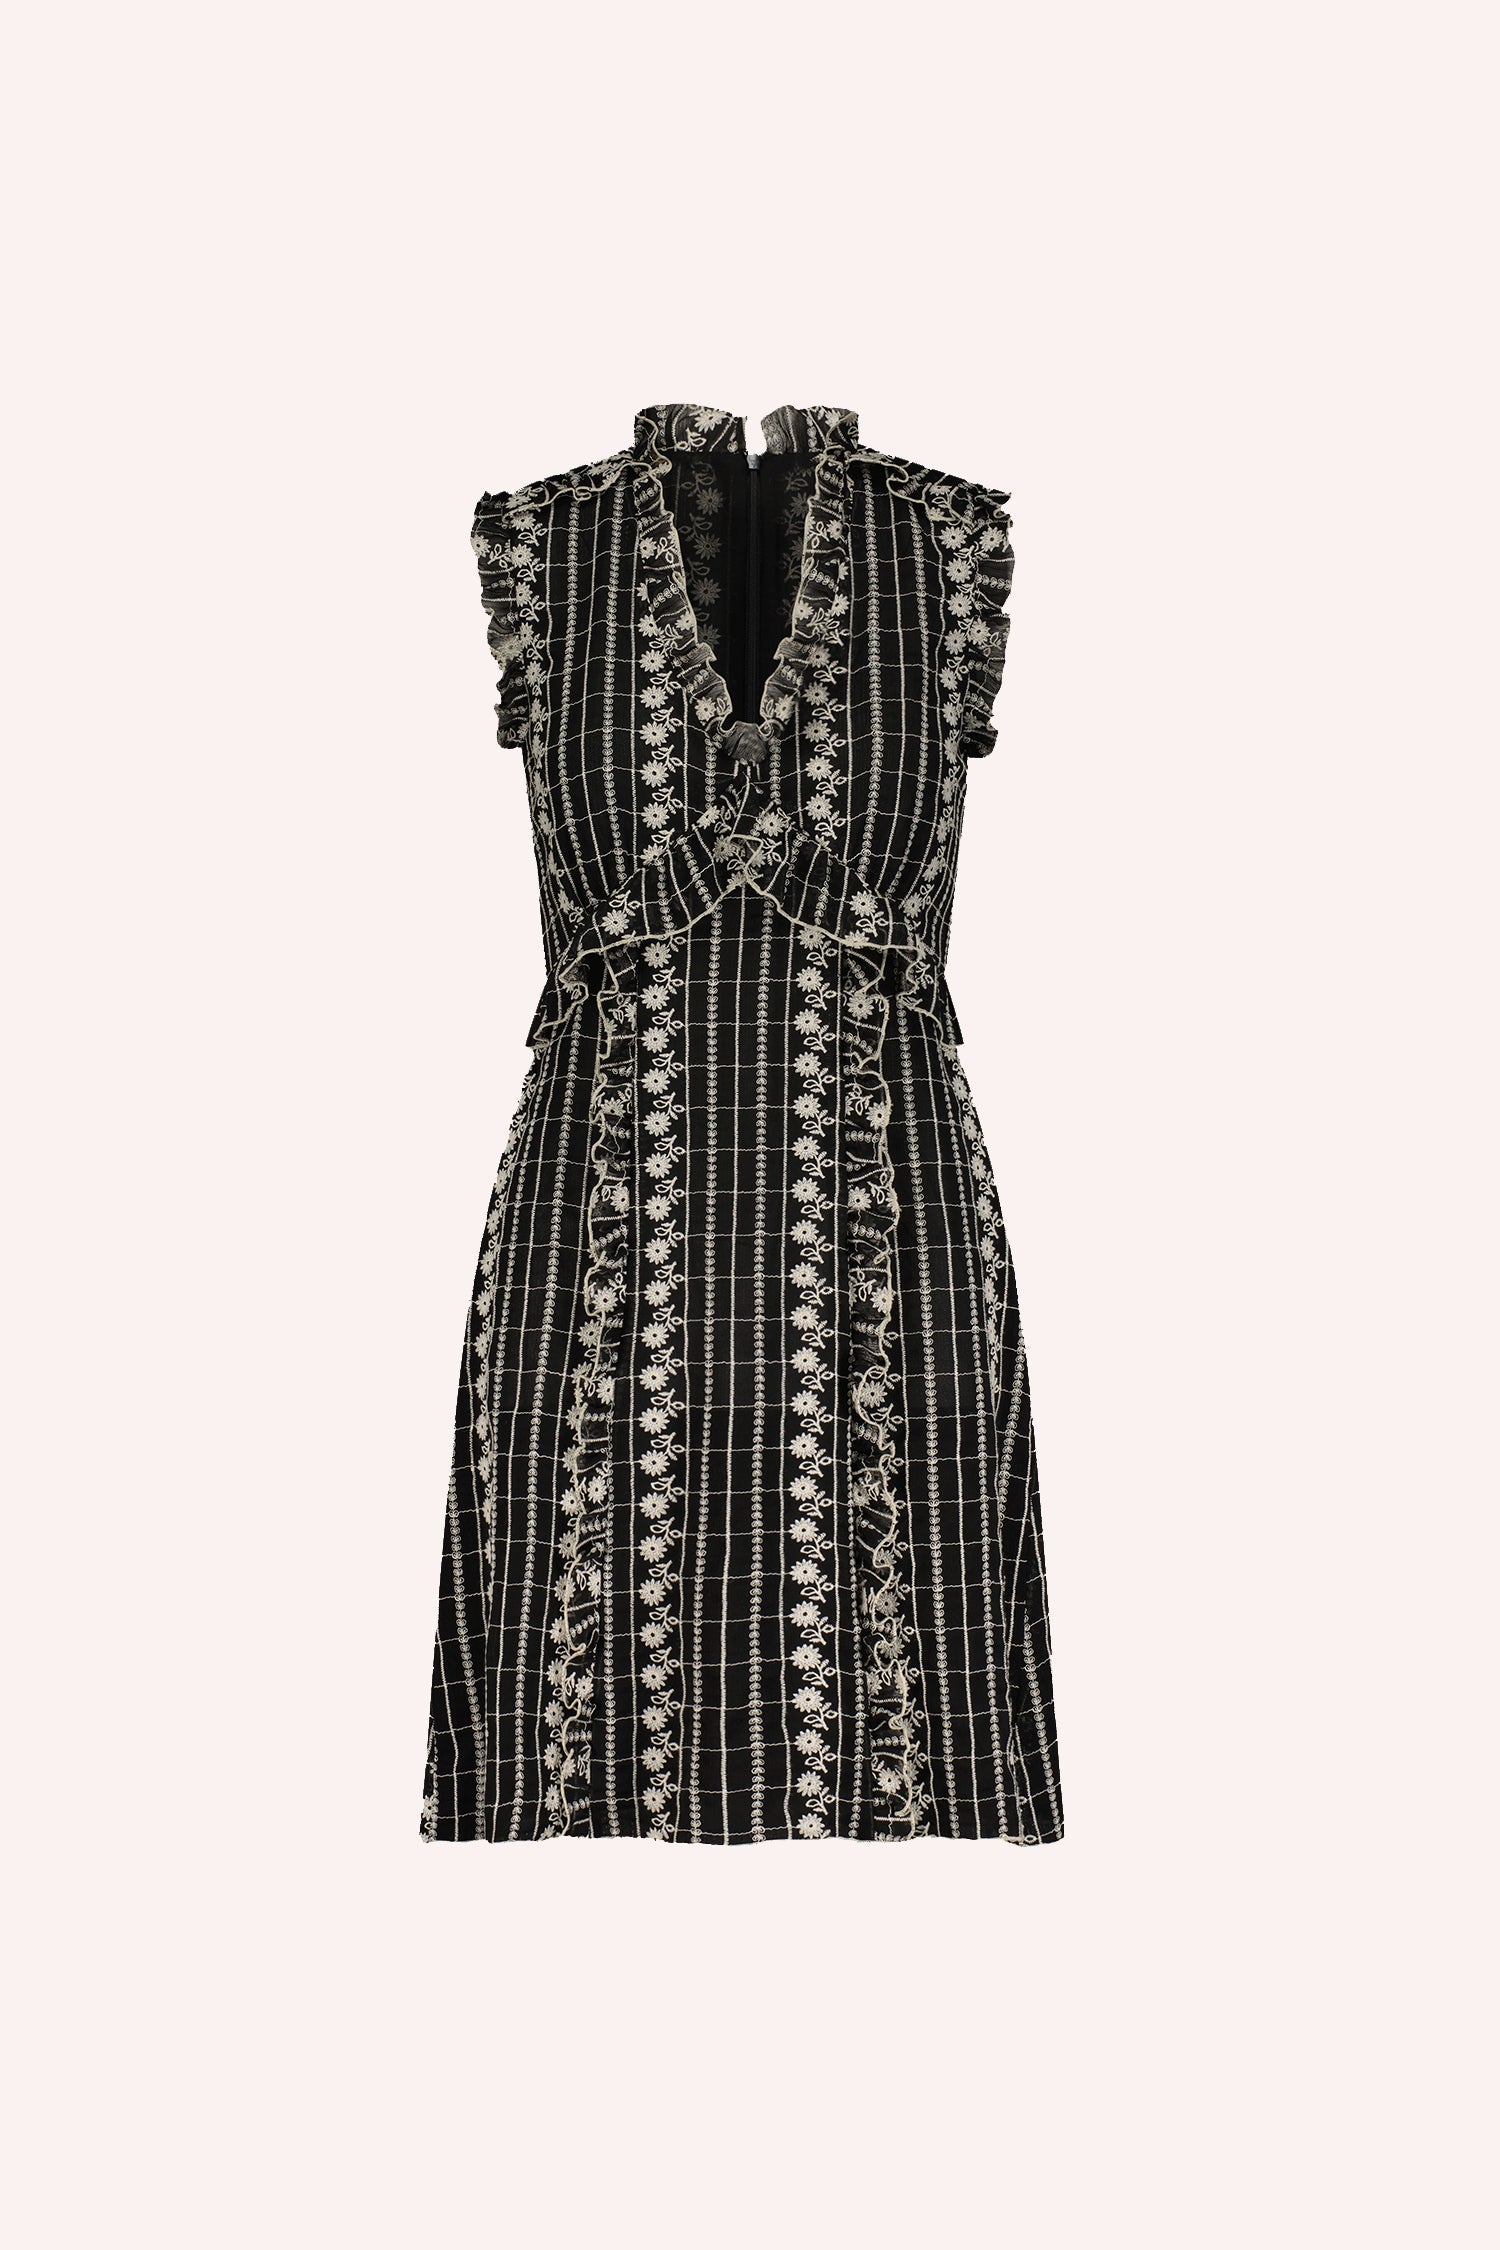 Embroidered Floral Checkerboard Dress Black Multi – Anna Sui